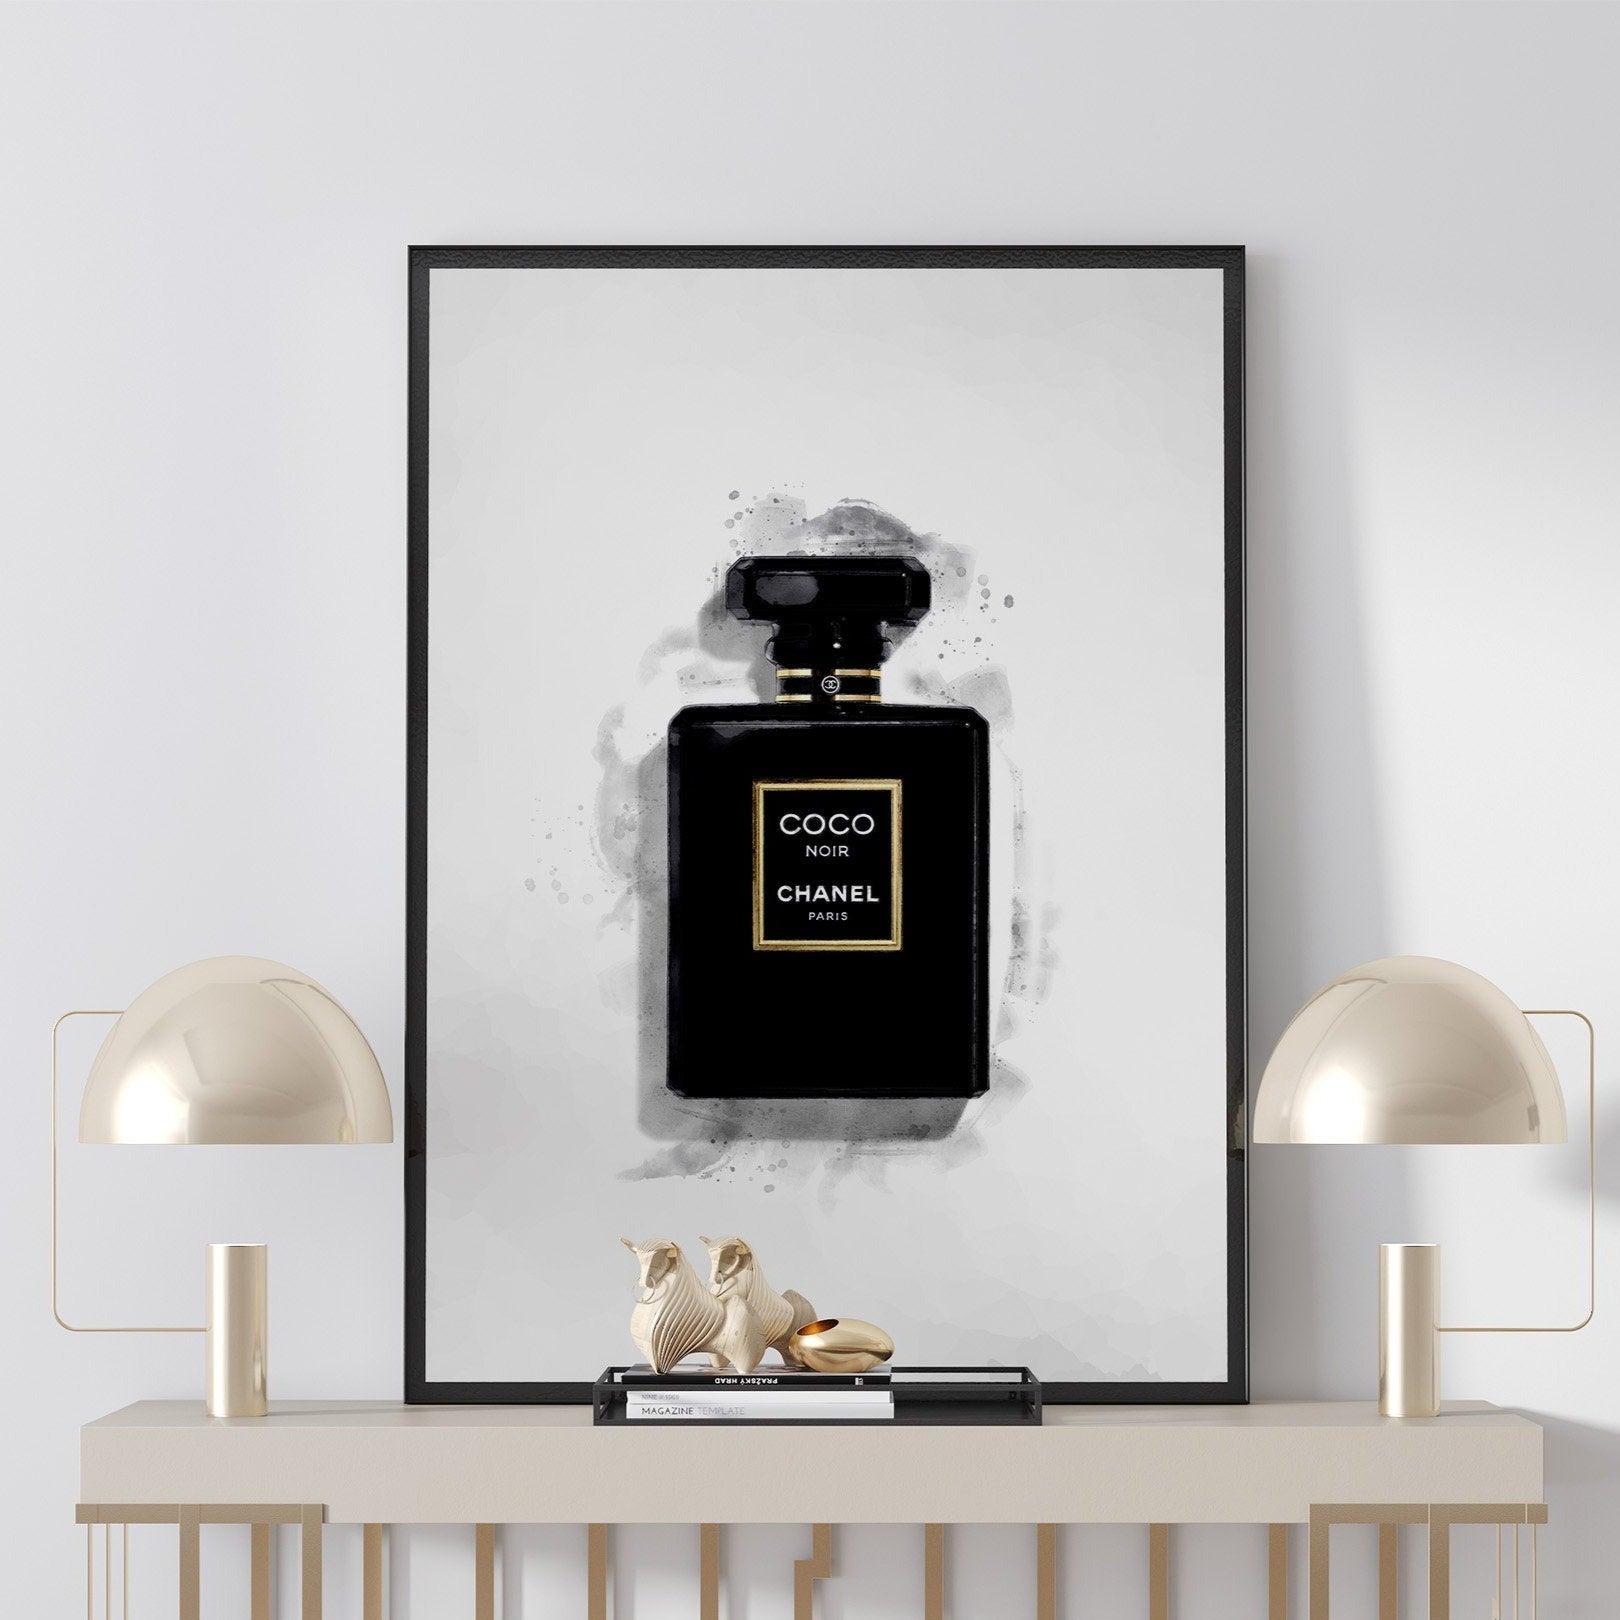 Pink Chanel Perfume Bottle Canvas Print – TemproDesign